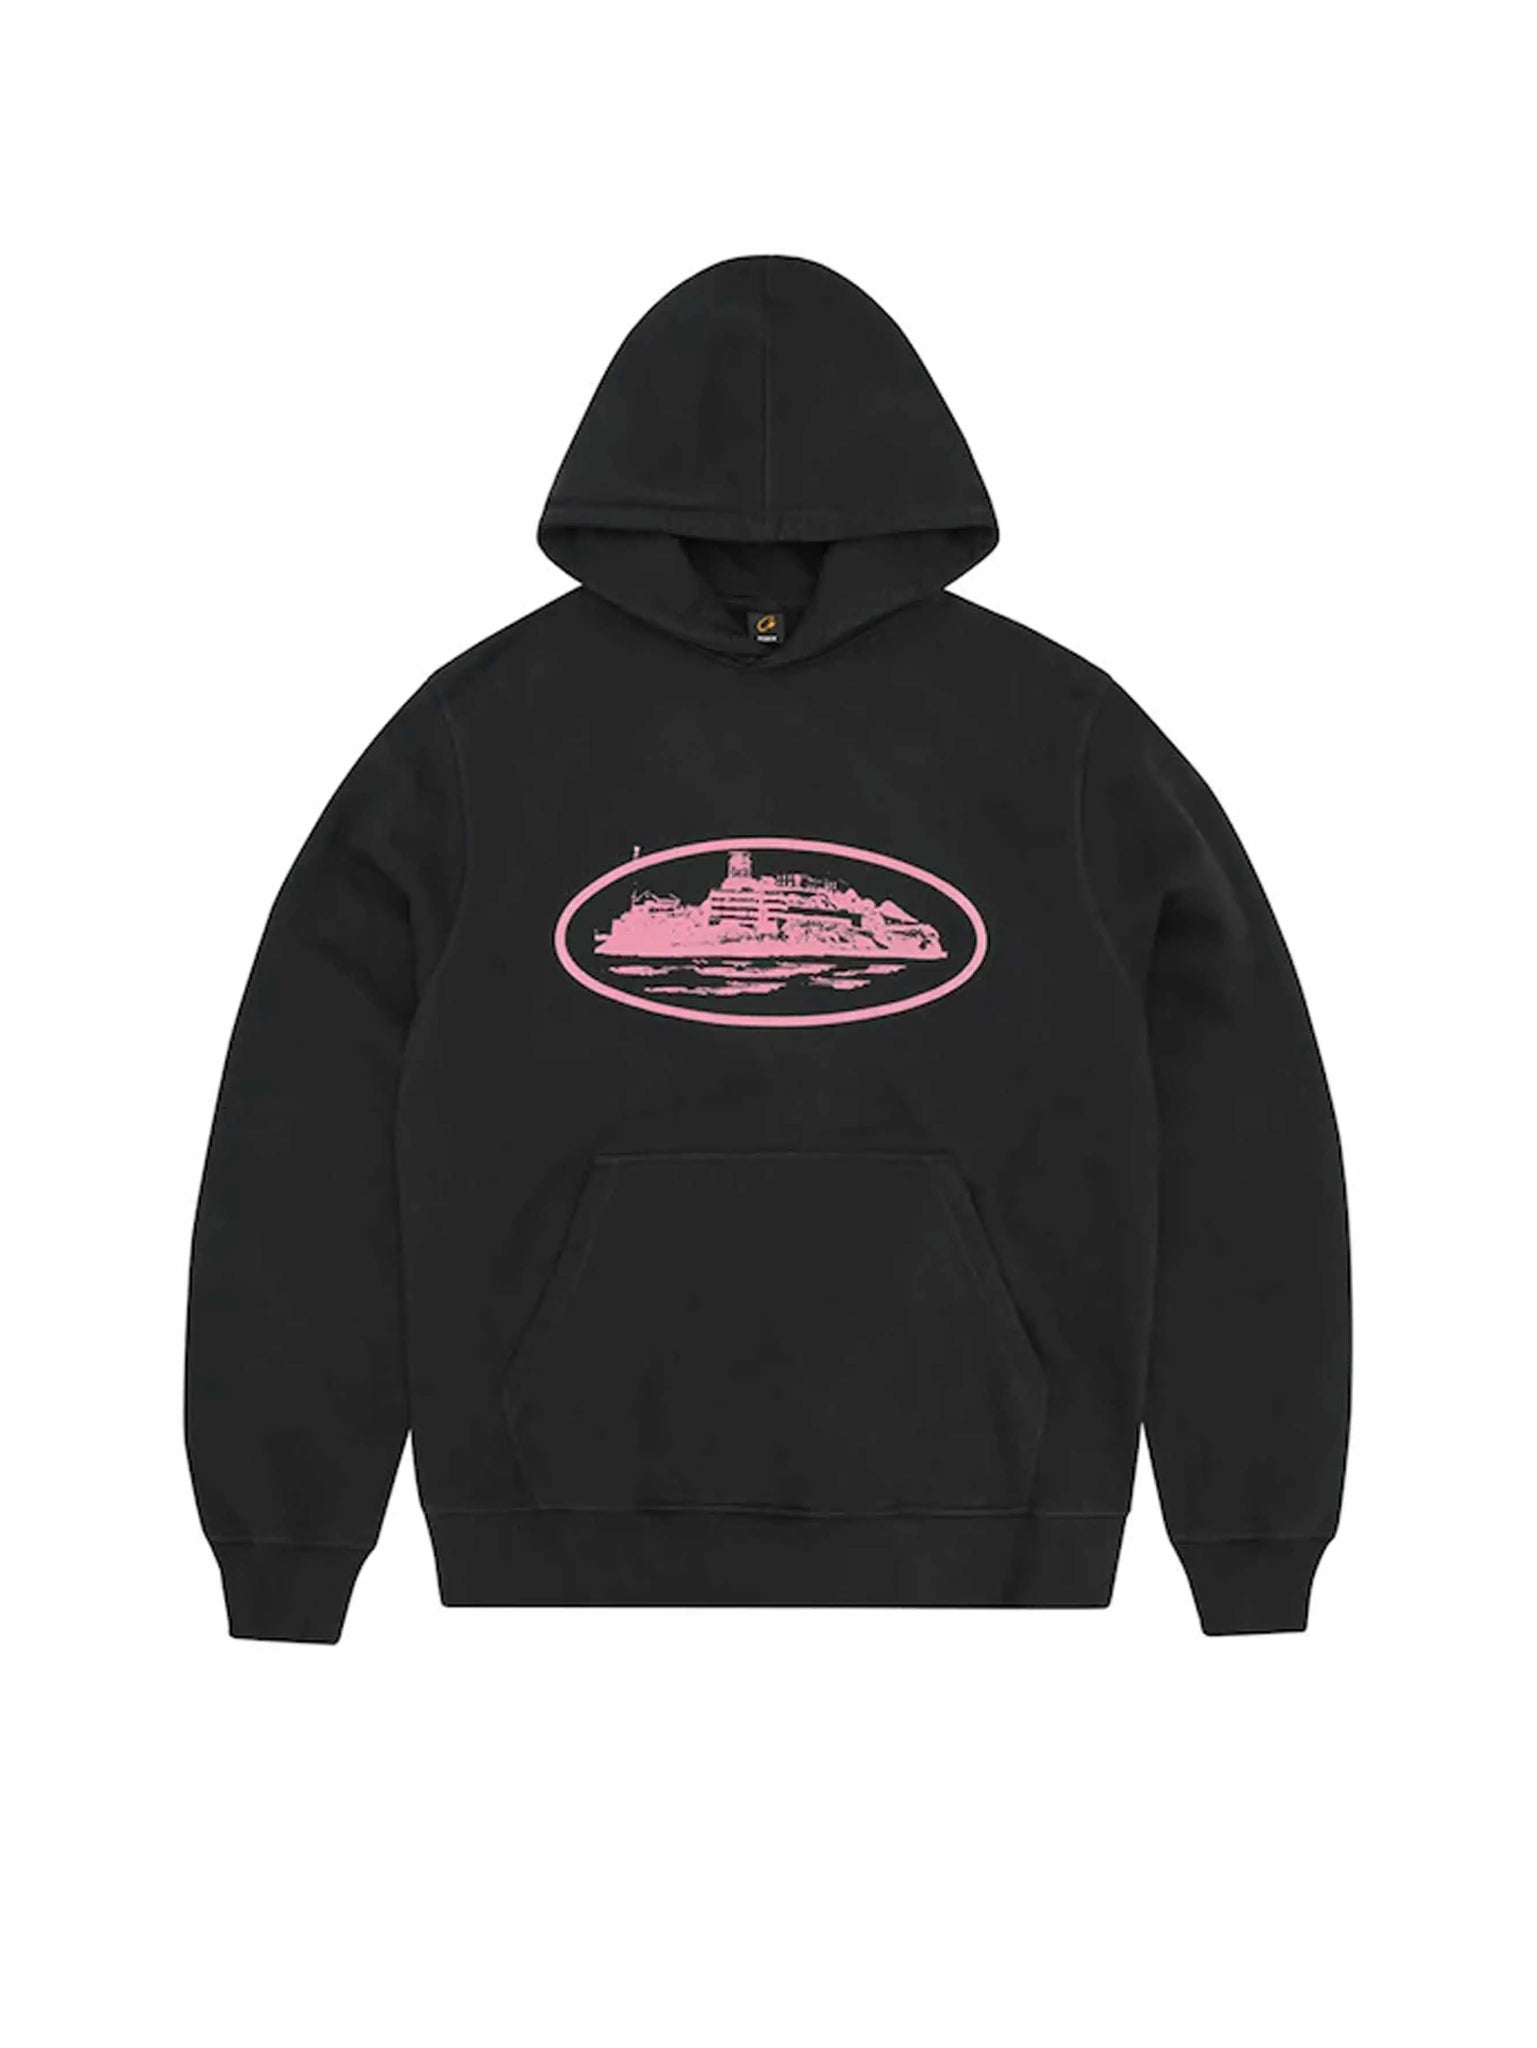 Corteiz Alcatraz V2 Hoodie Black/Pink in Auckland, New Zealand - Shop name